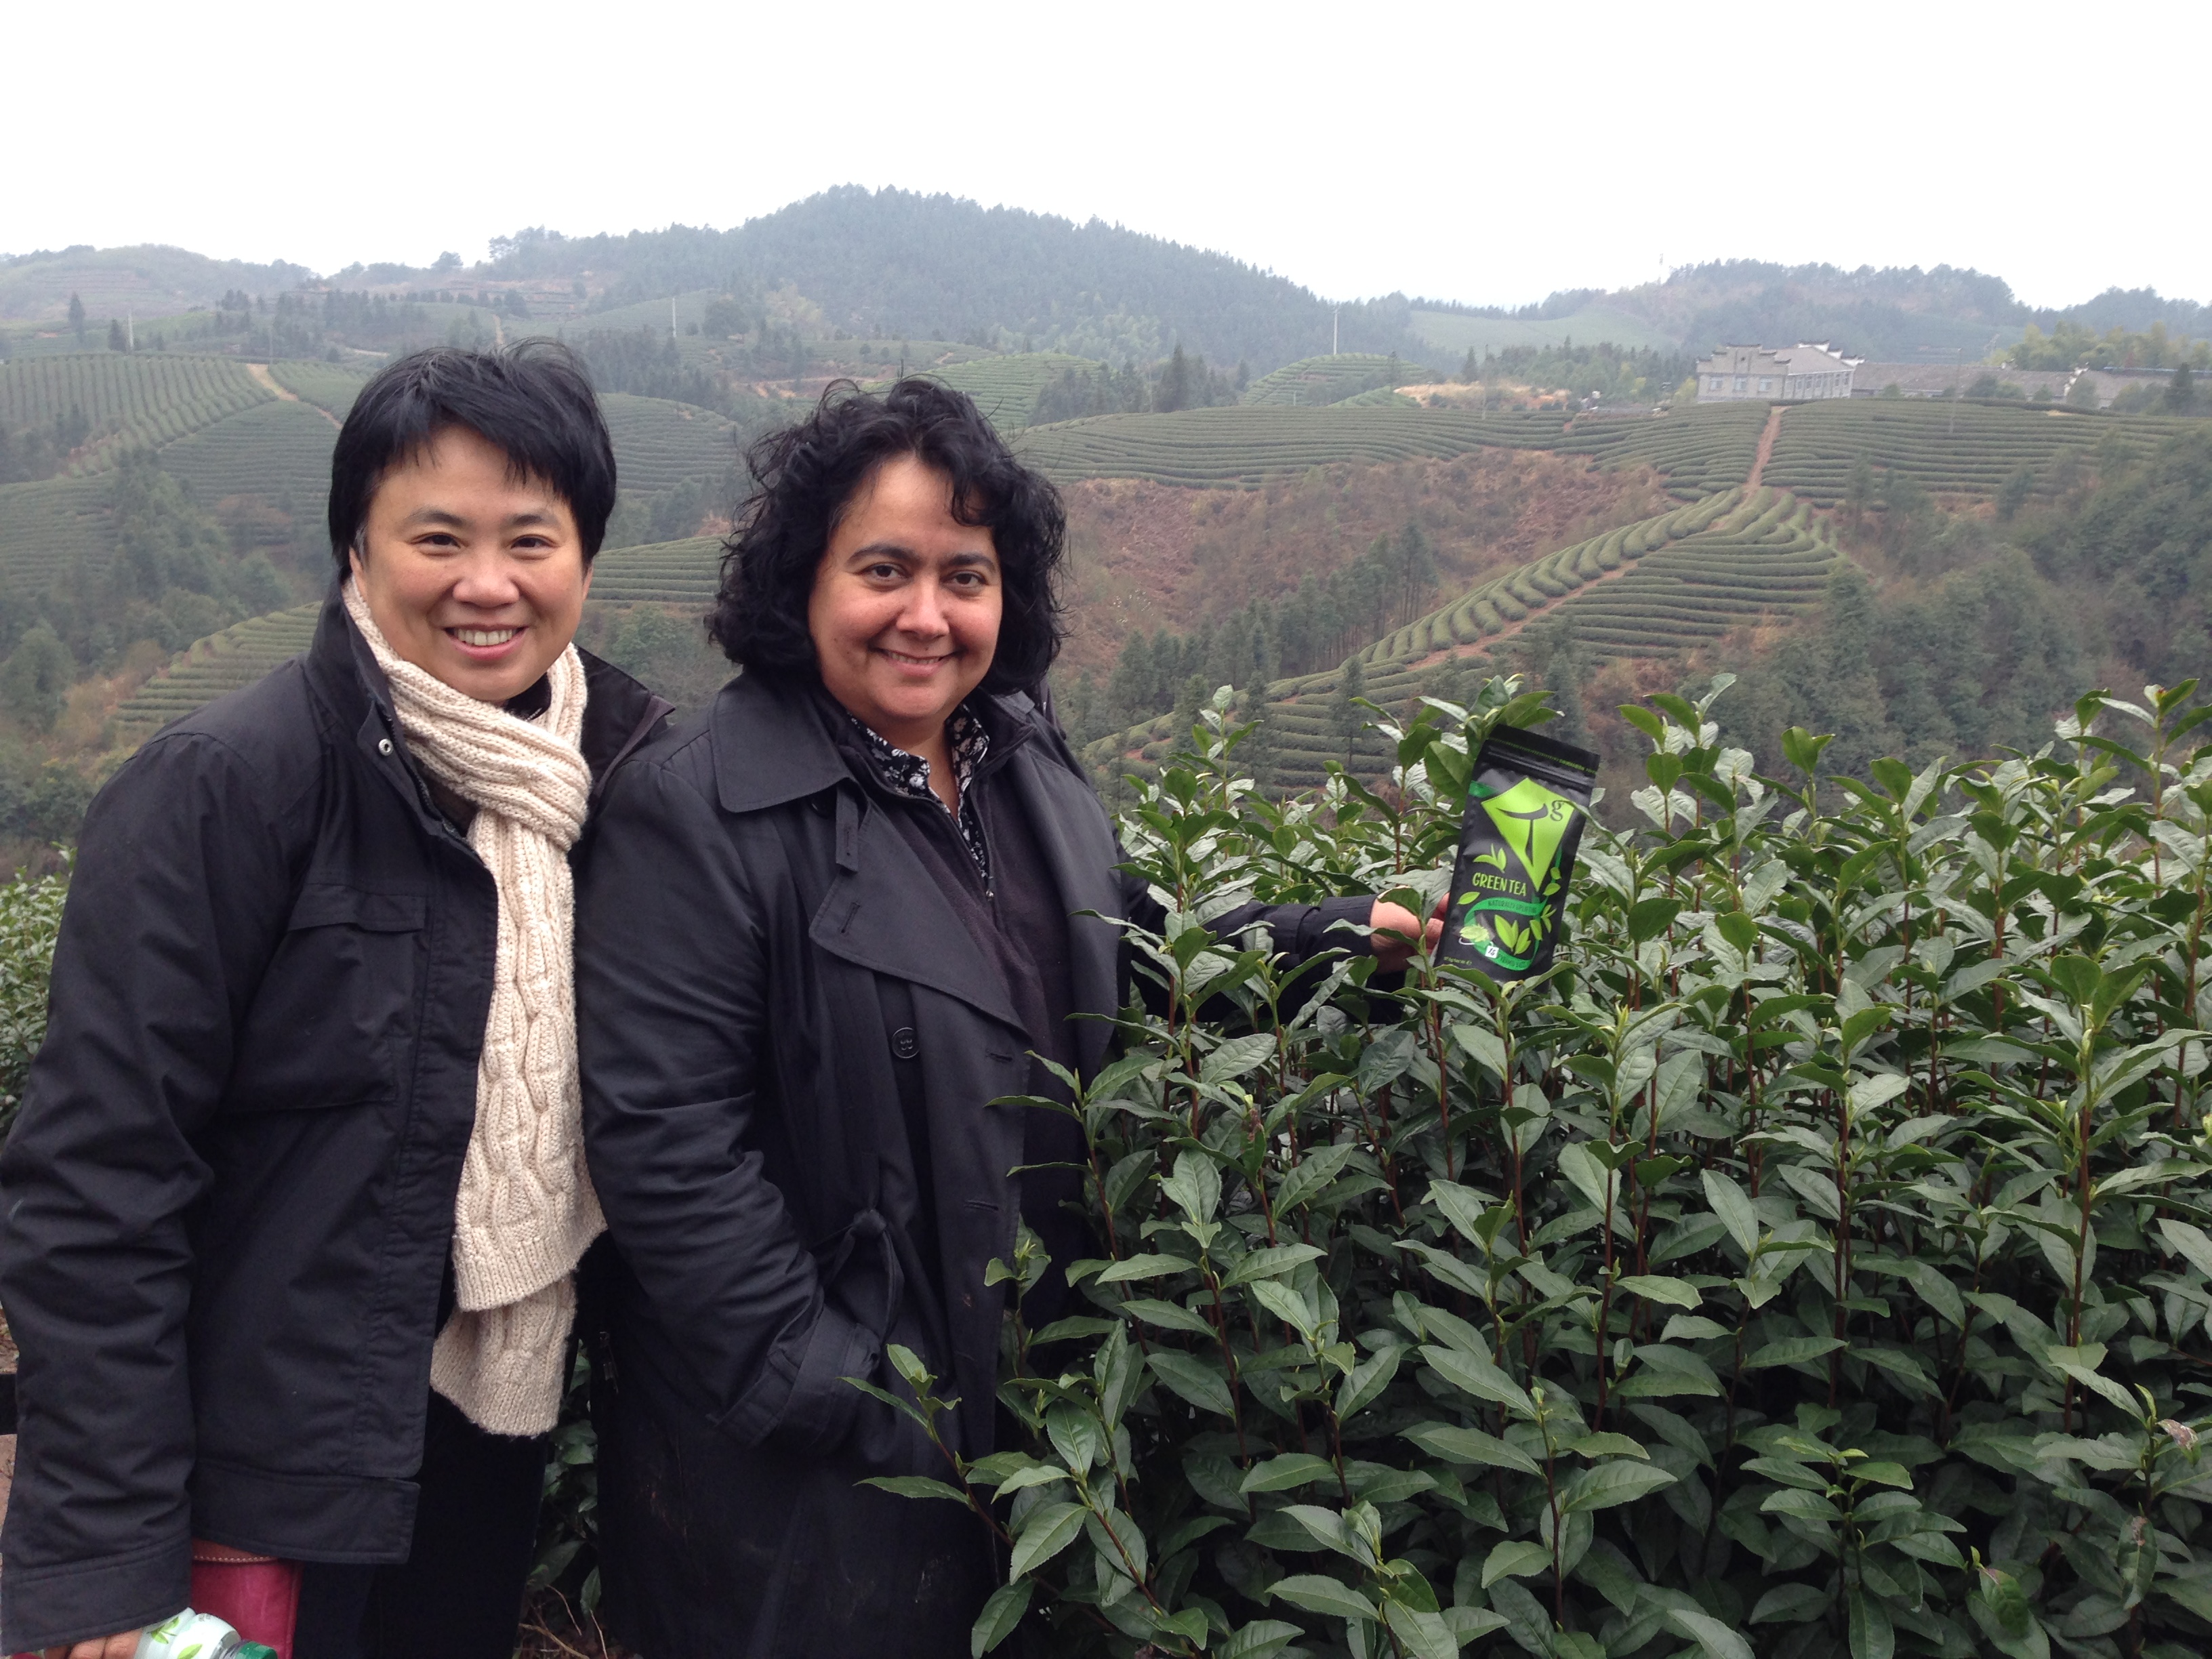 Hua-and-Sophia-in-the-tea-plantation-in-Chinajpg